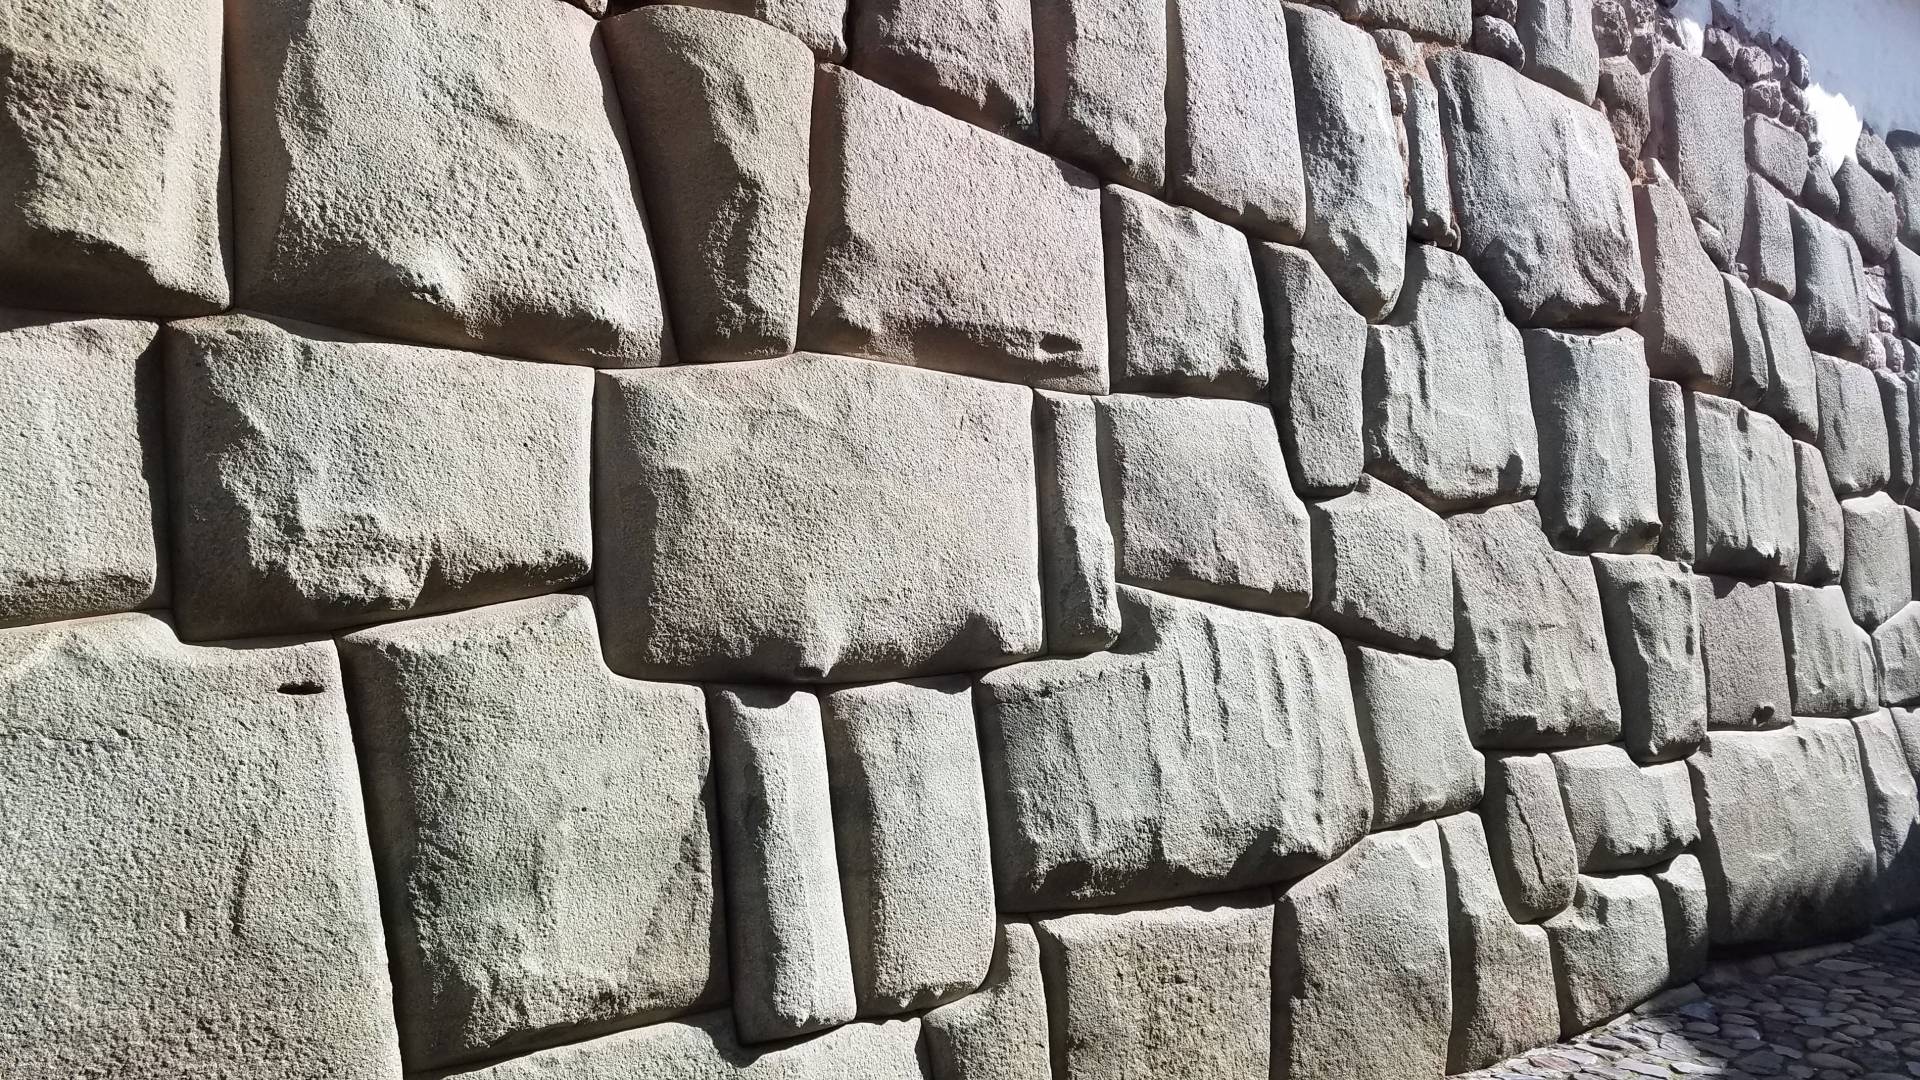 Stone wall in Cuzco